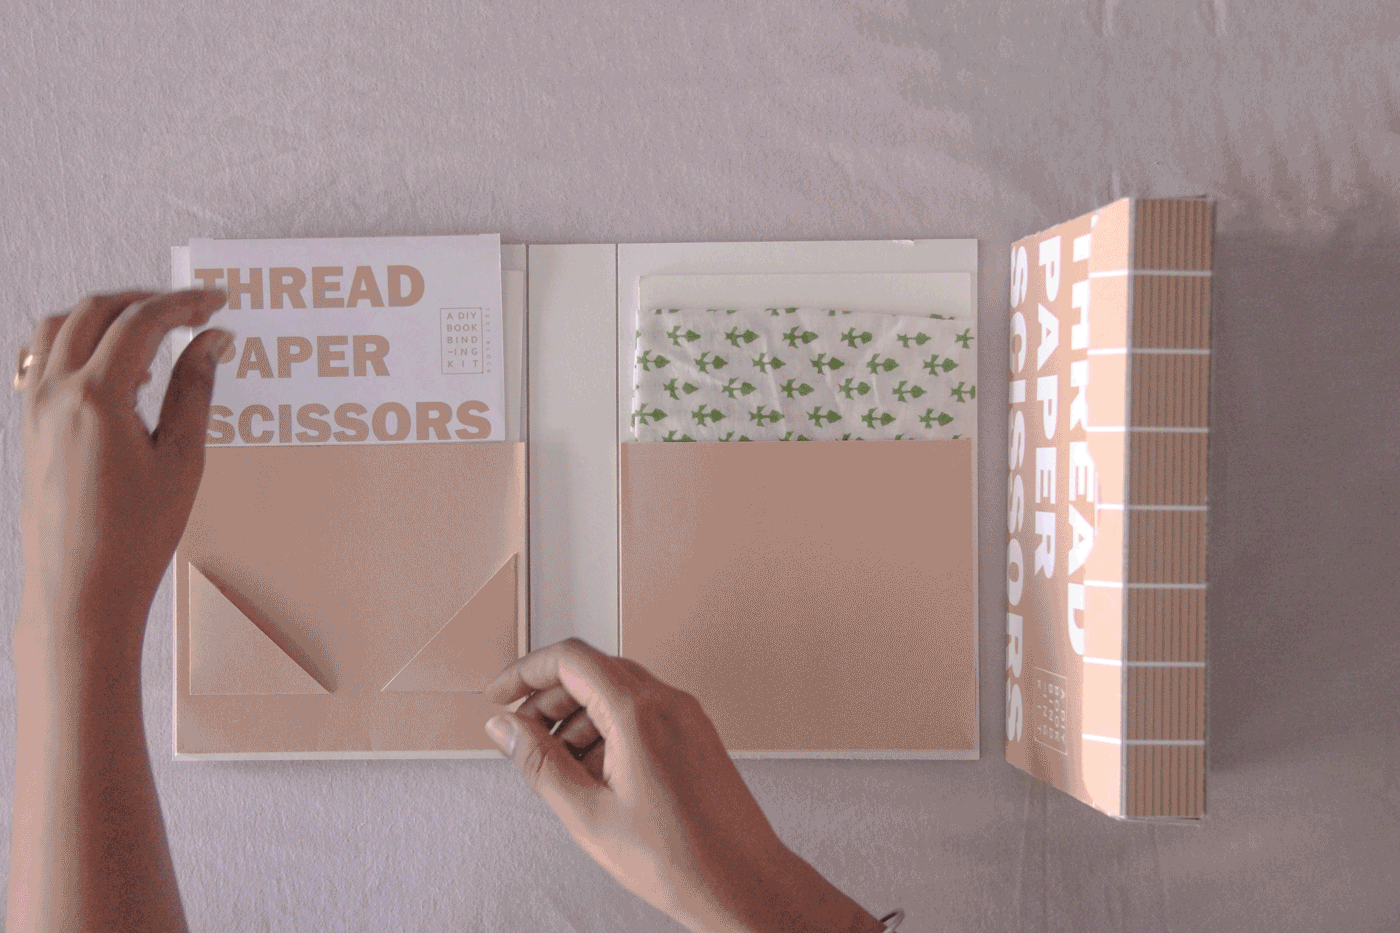 illustrations manual instruction guide Bookbinding guide Packaging Thread Paper Scissors tools DIY kits diy kits